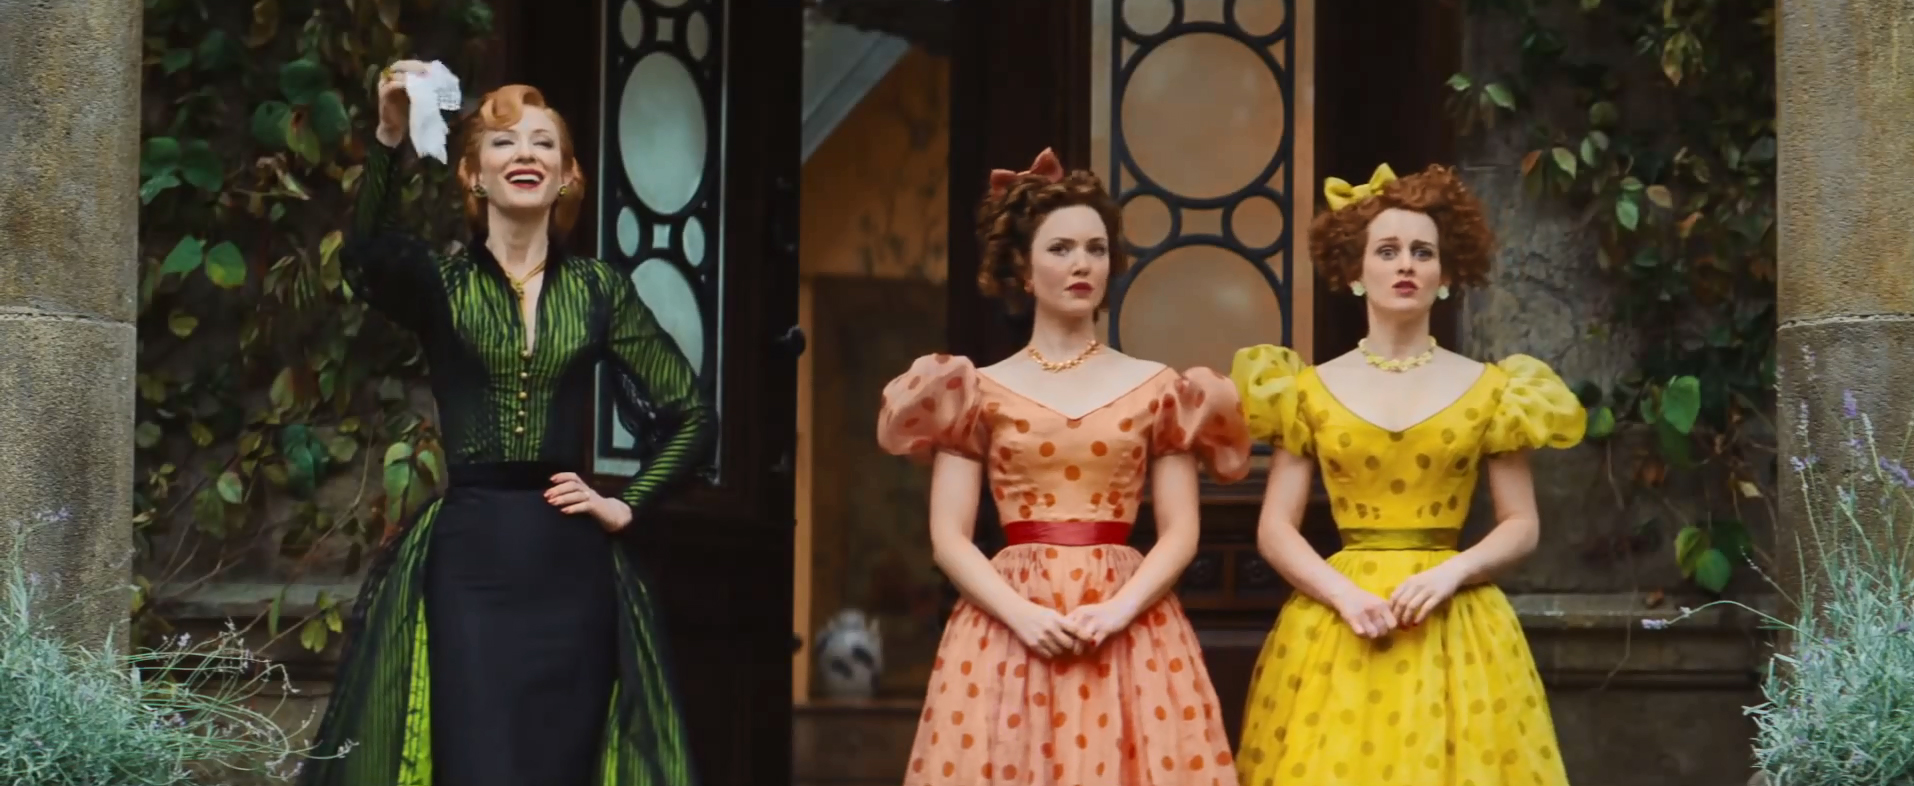 Lily James, Richard Madden Enchant at Premiere of Disney's Live-Action ' Cinderella